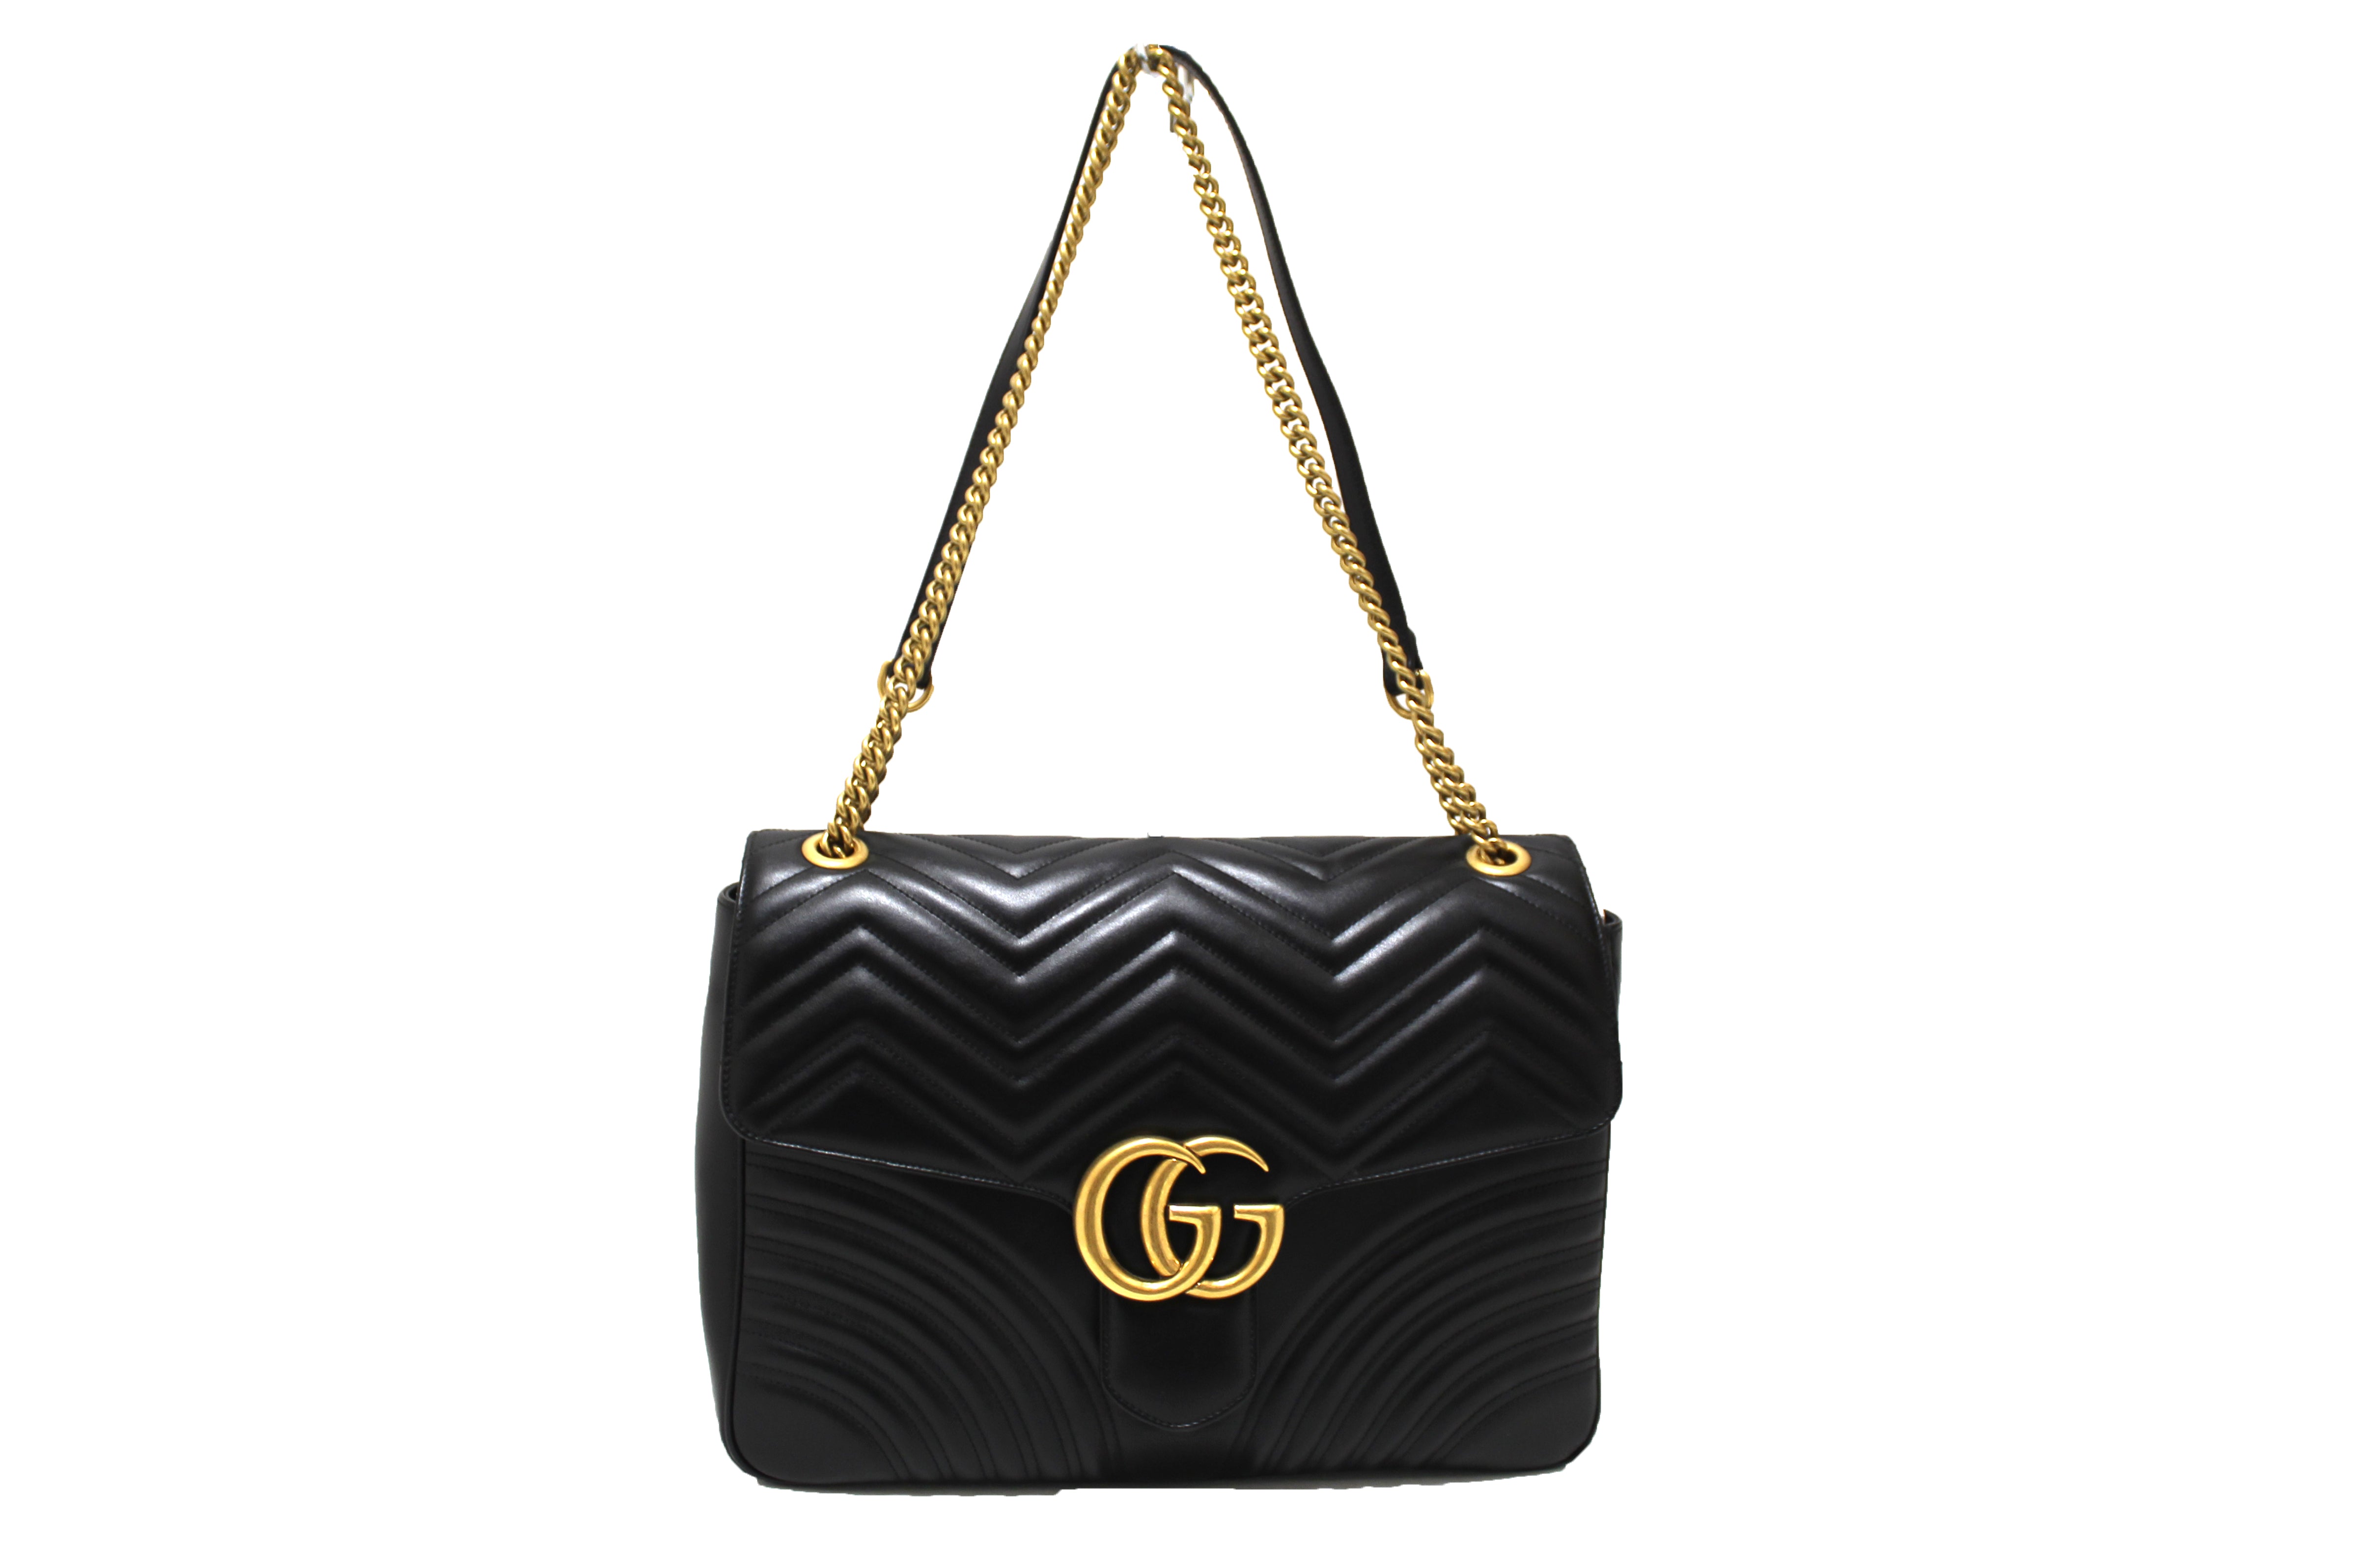 Authentic Gucci Black Calfskin Leather Large Marmont Matelasse Flap Chain Shoulder Bag 498090